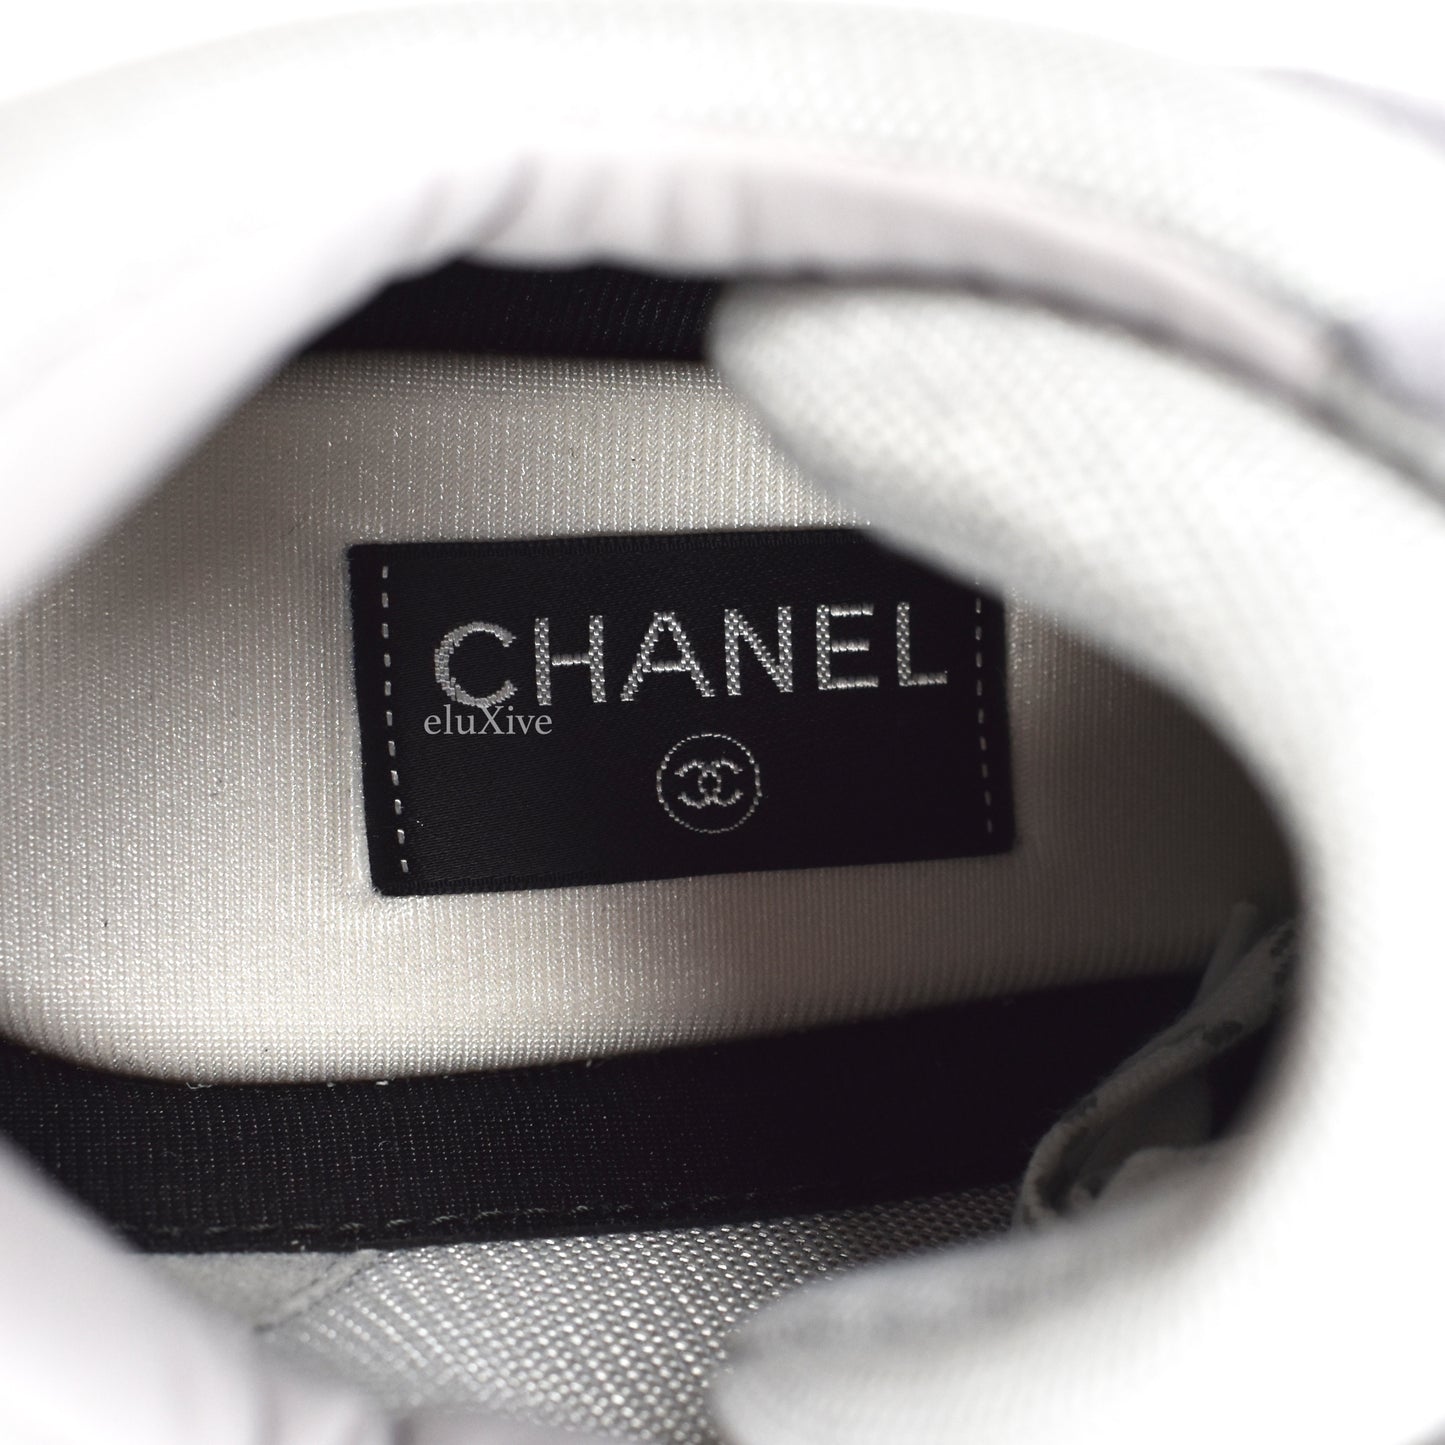 Chanel - Classic Monogram Logo Trainer (Gray)